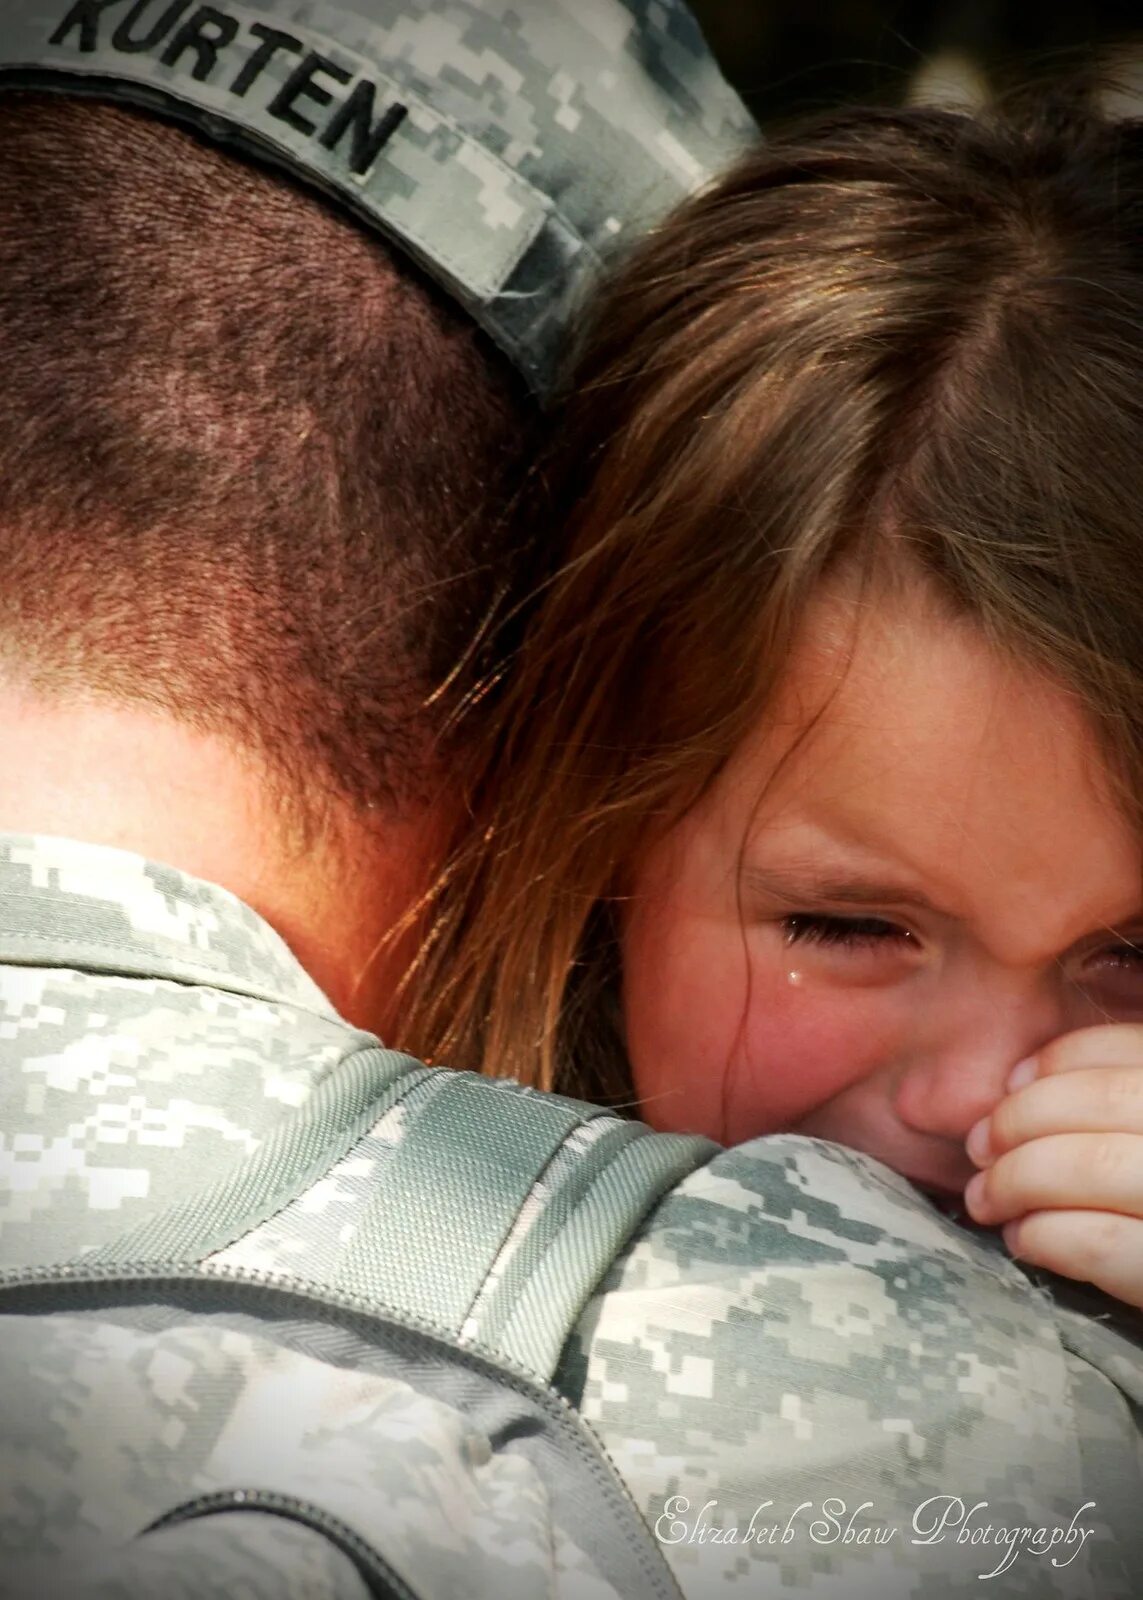 Грустная про отца. Девушка солдат. Девочка обнимает папу. Папа обнимает дочь. Солдат обнимает ребенка.